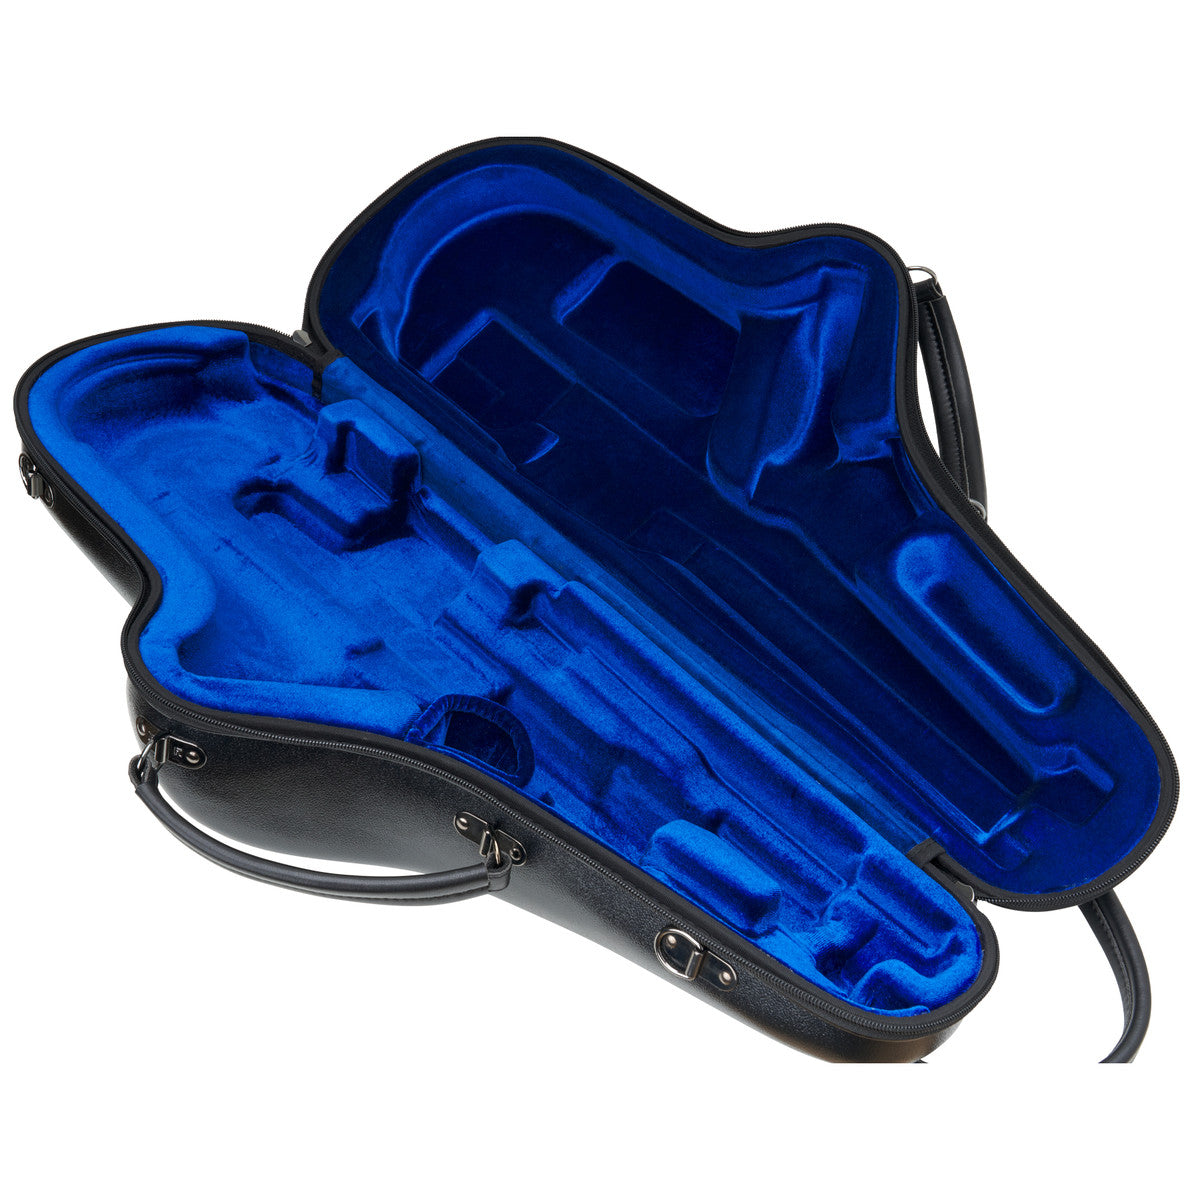 Protec - BM304CT Alto Saxophone Micro ZIP Case (Black)